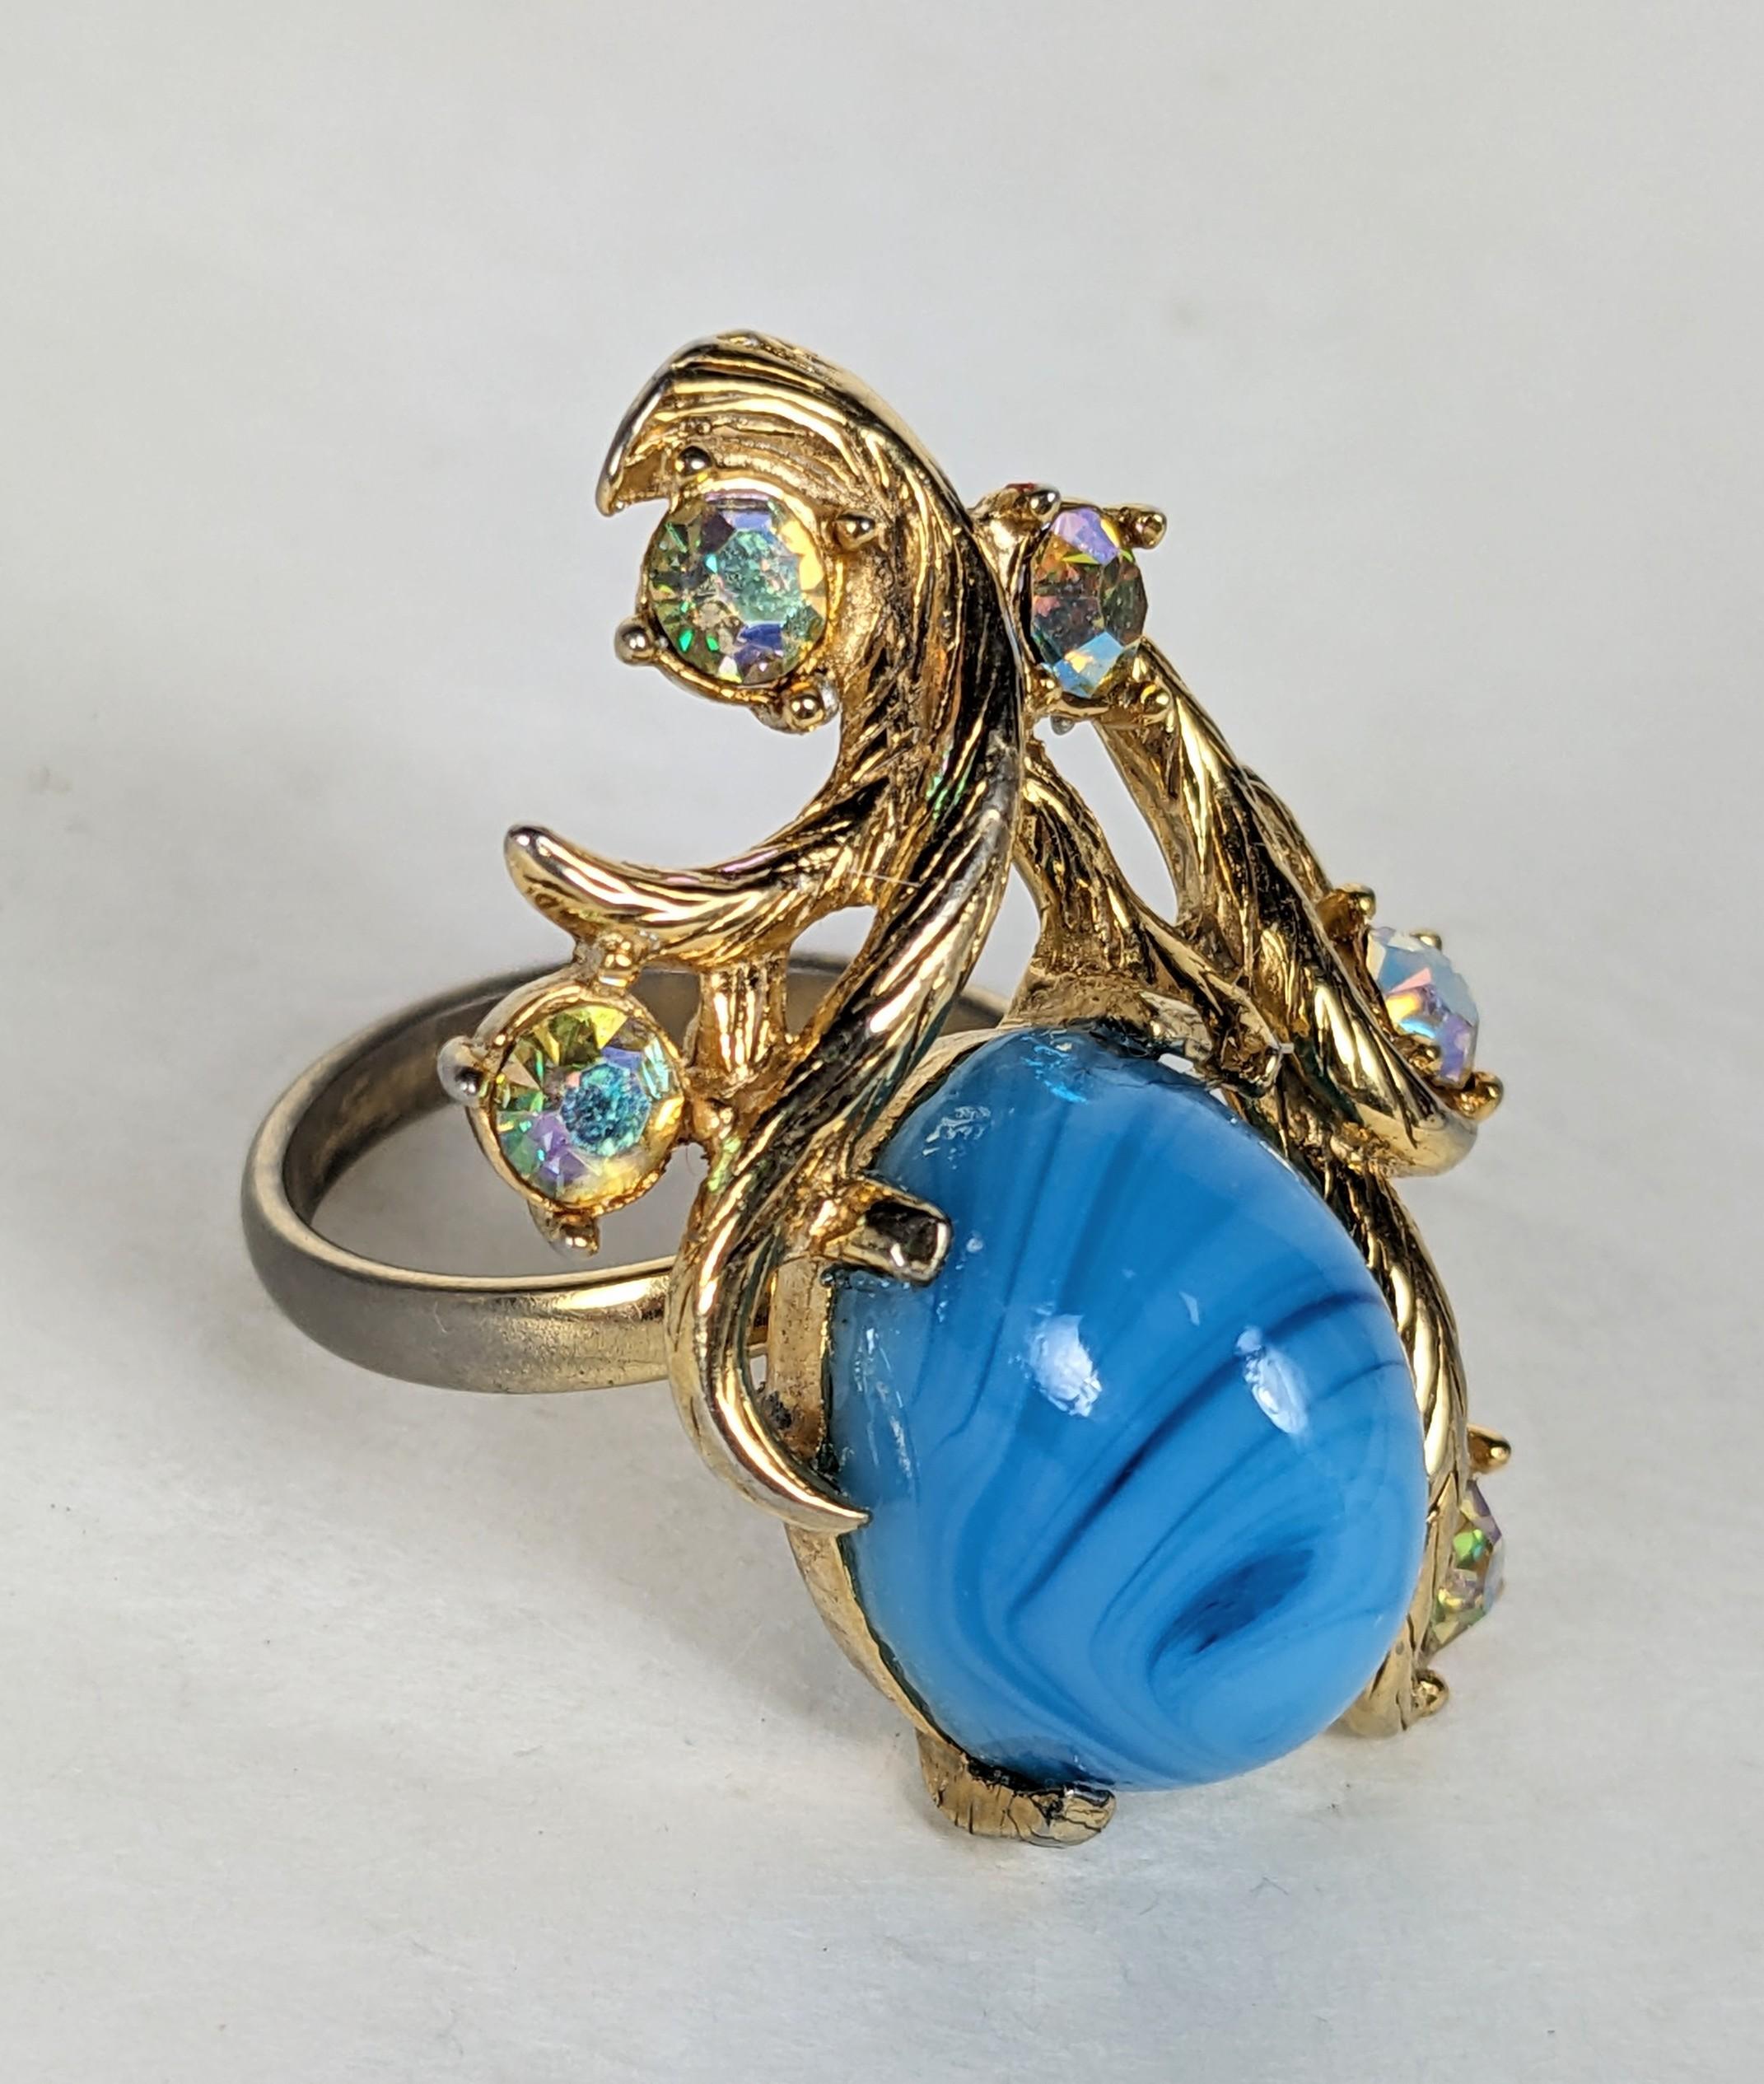 Baroque Revival Elsa Schiaparelli Turquoise Cocktail Ring For Sale